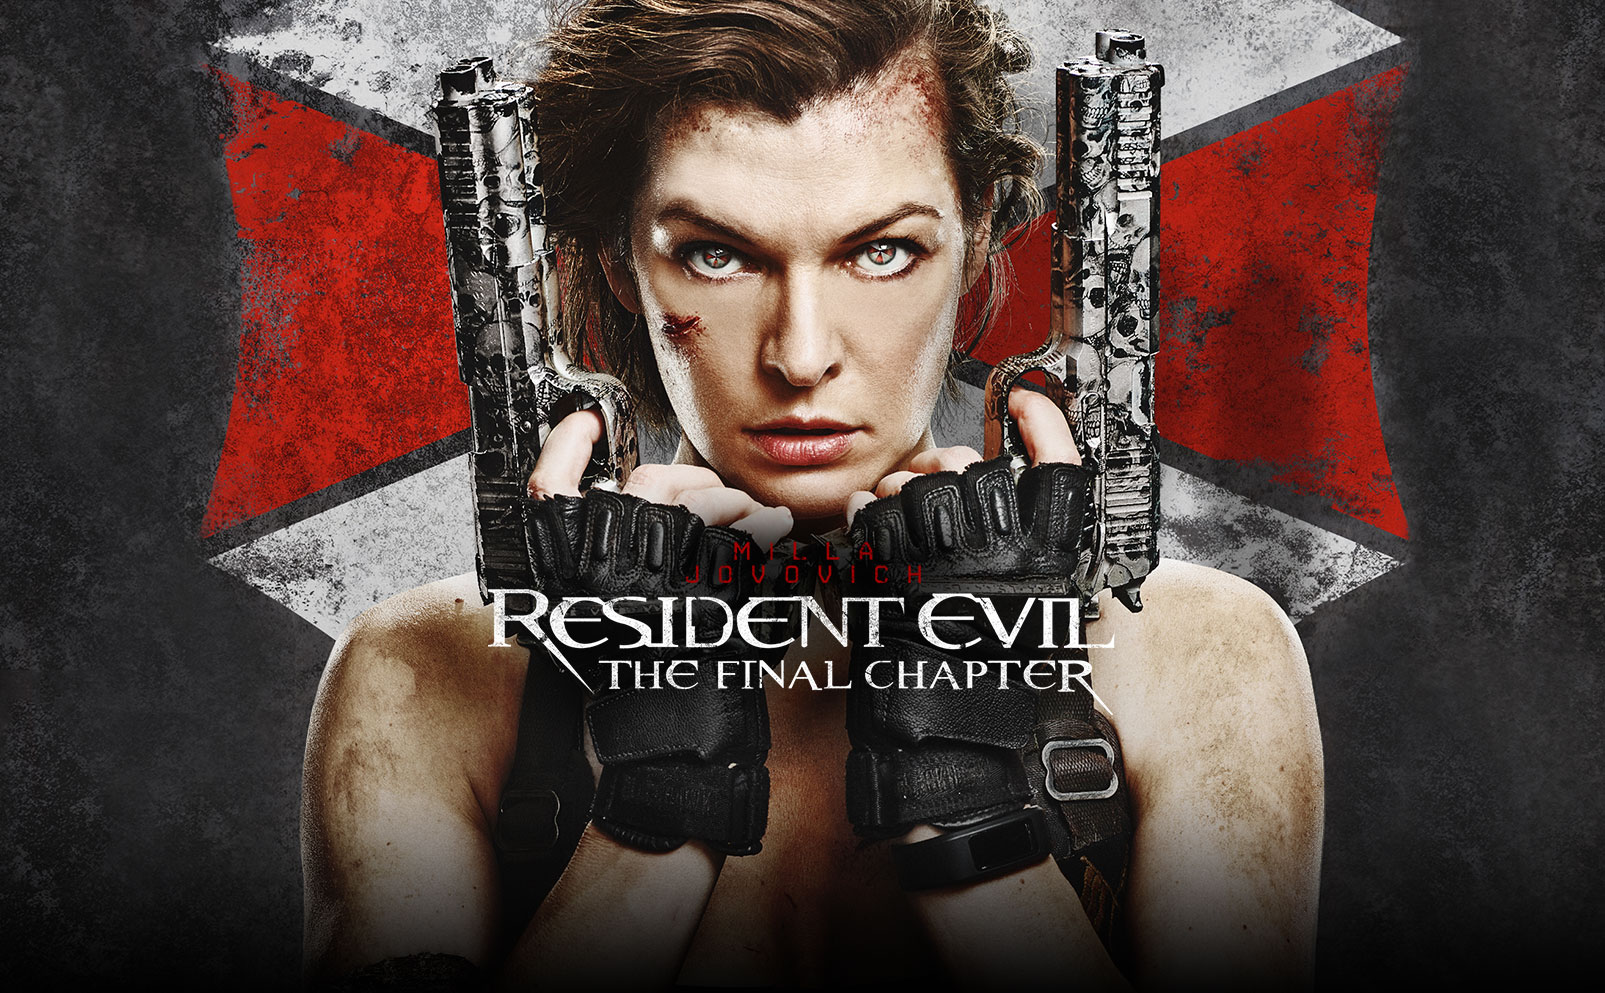 Sobre o filme Resident Evil: The Final Chapter